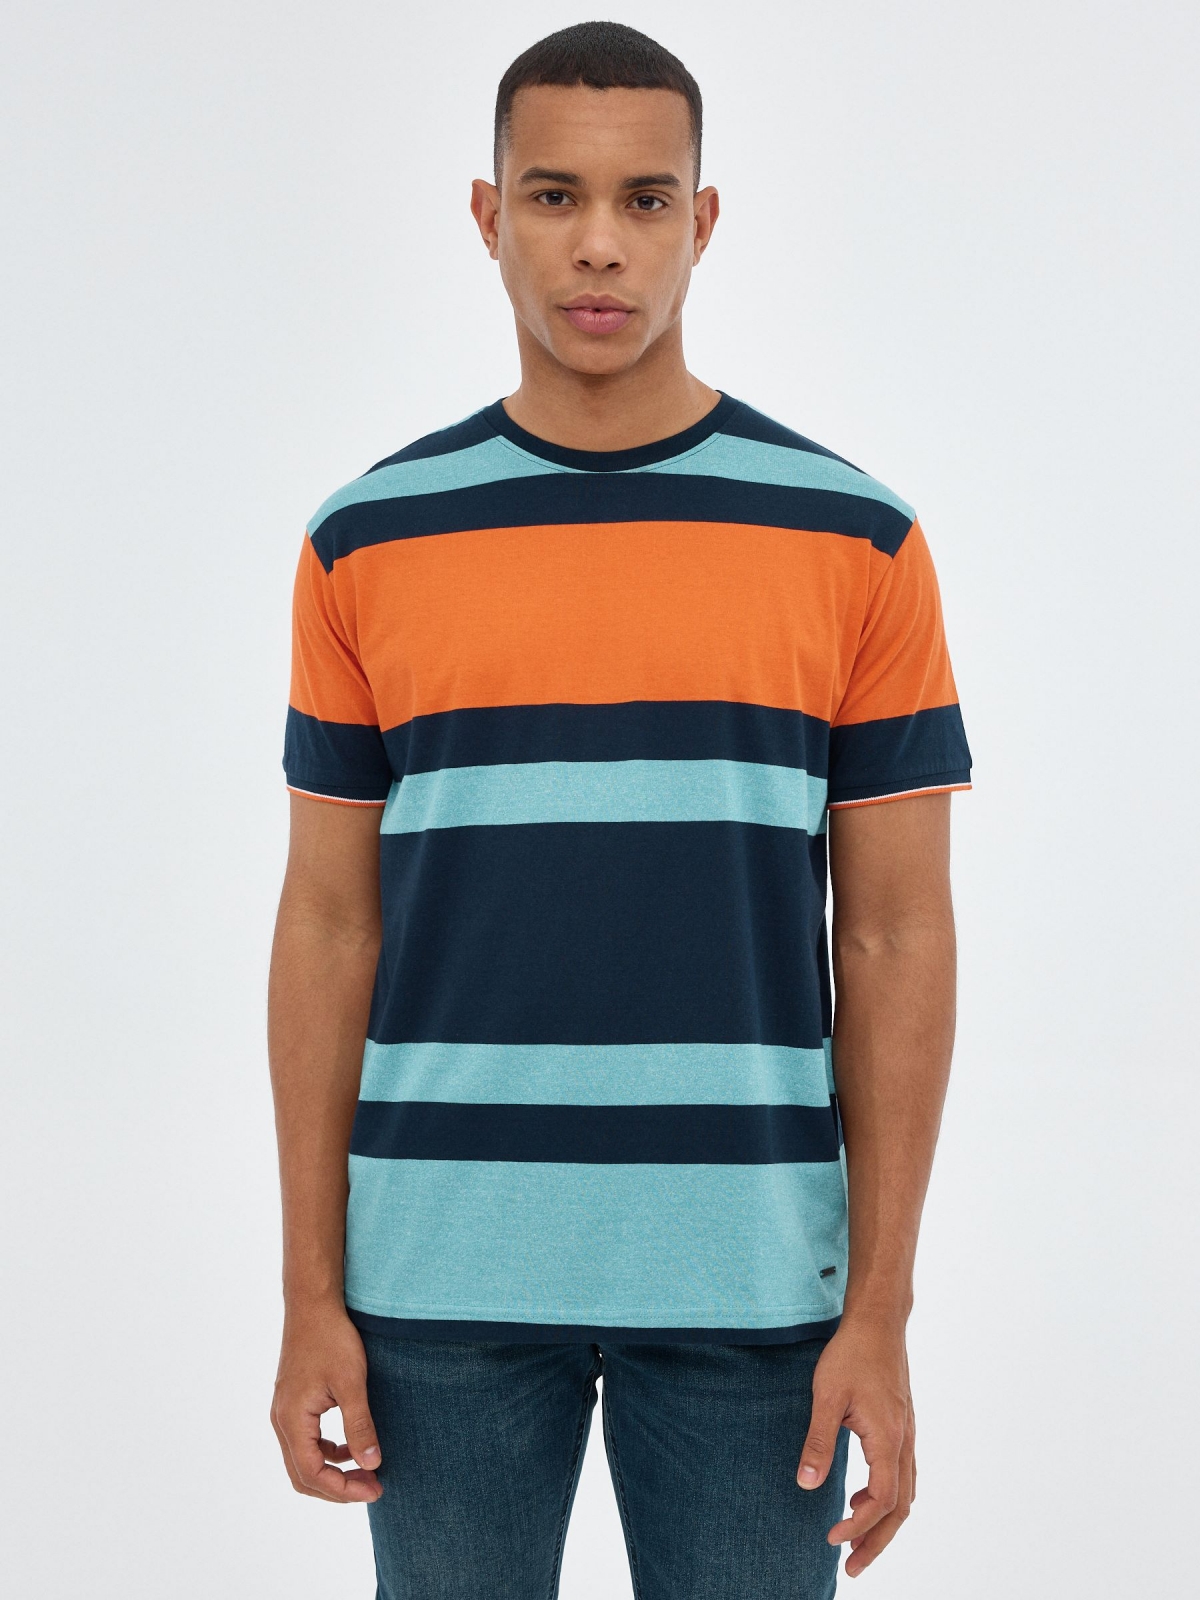 Camiseta rayas azul y naranja azul vista media frontal